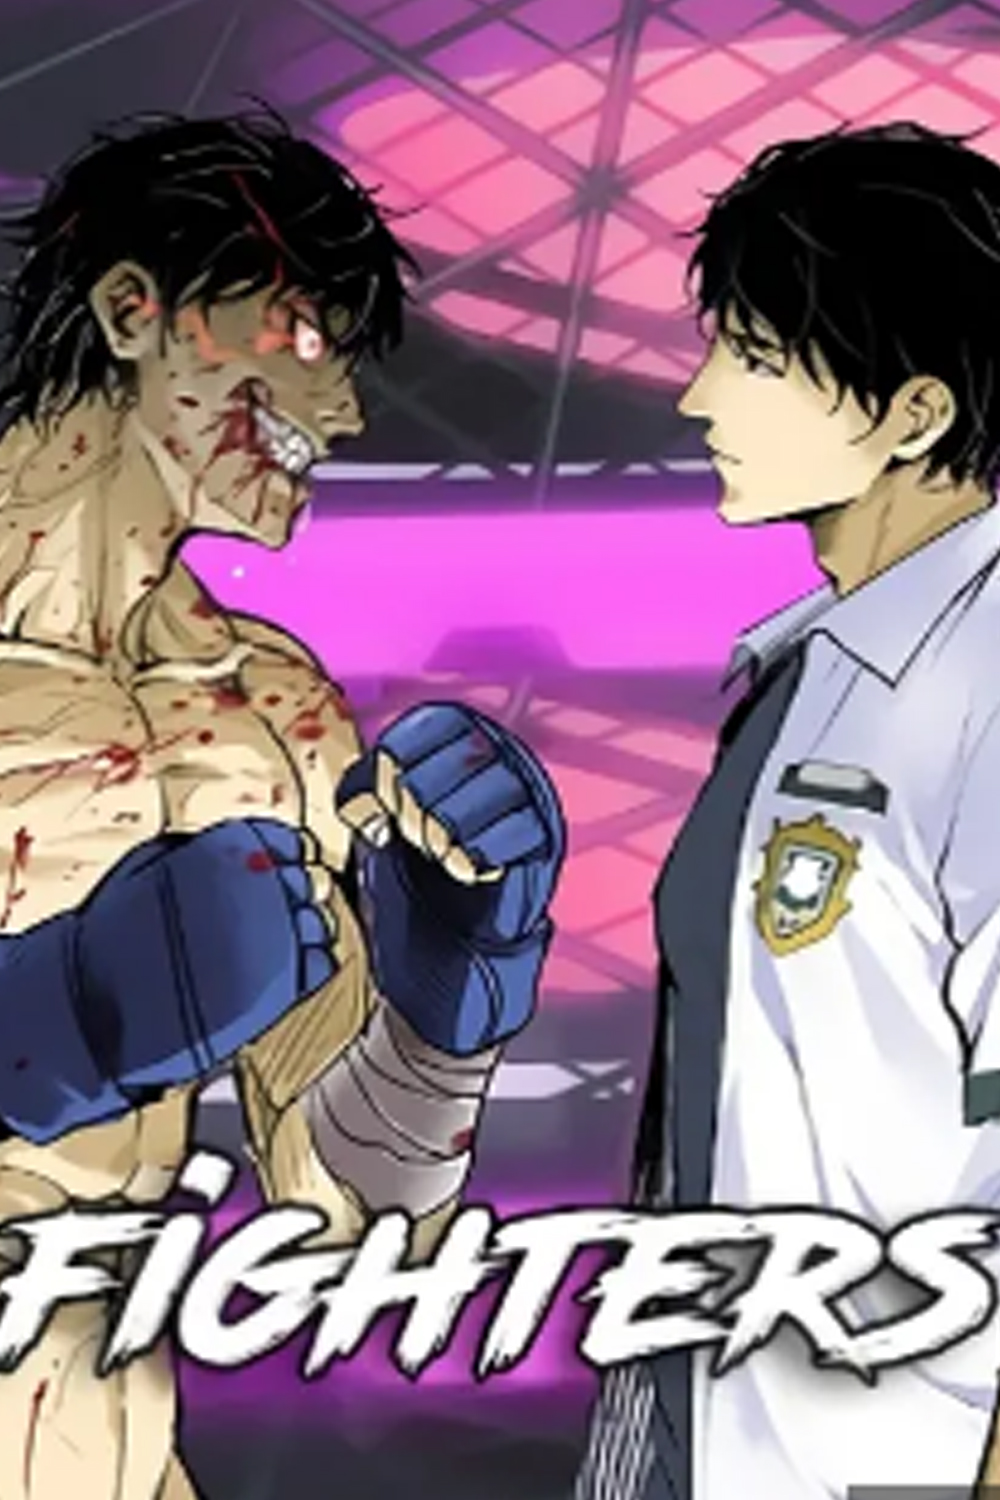 Fighters Manga